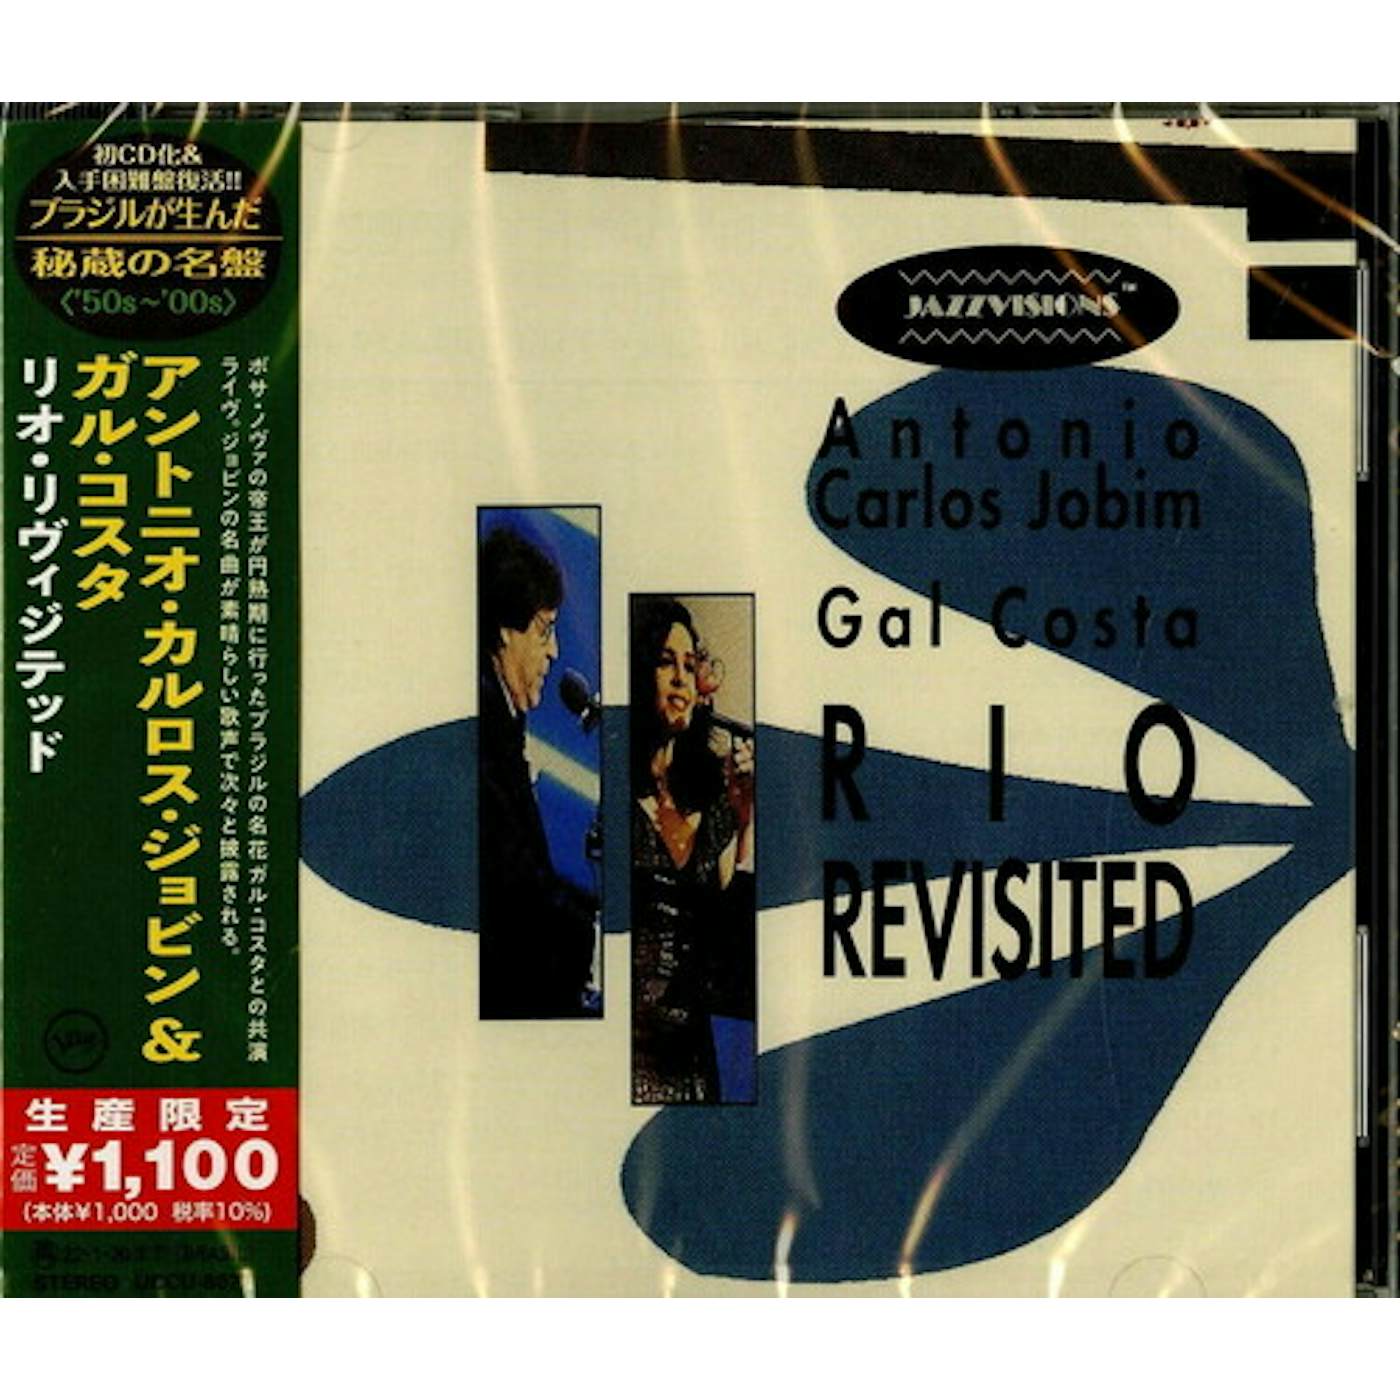 Antônio Carlos Jobim RIO REVISITED CD